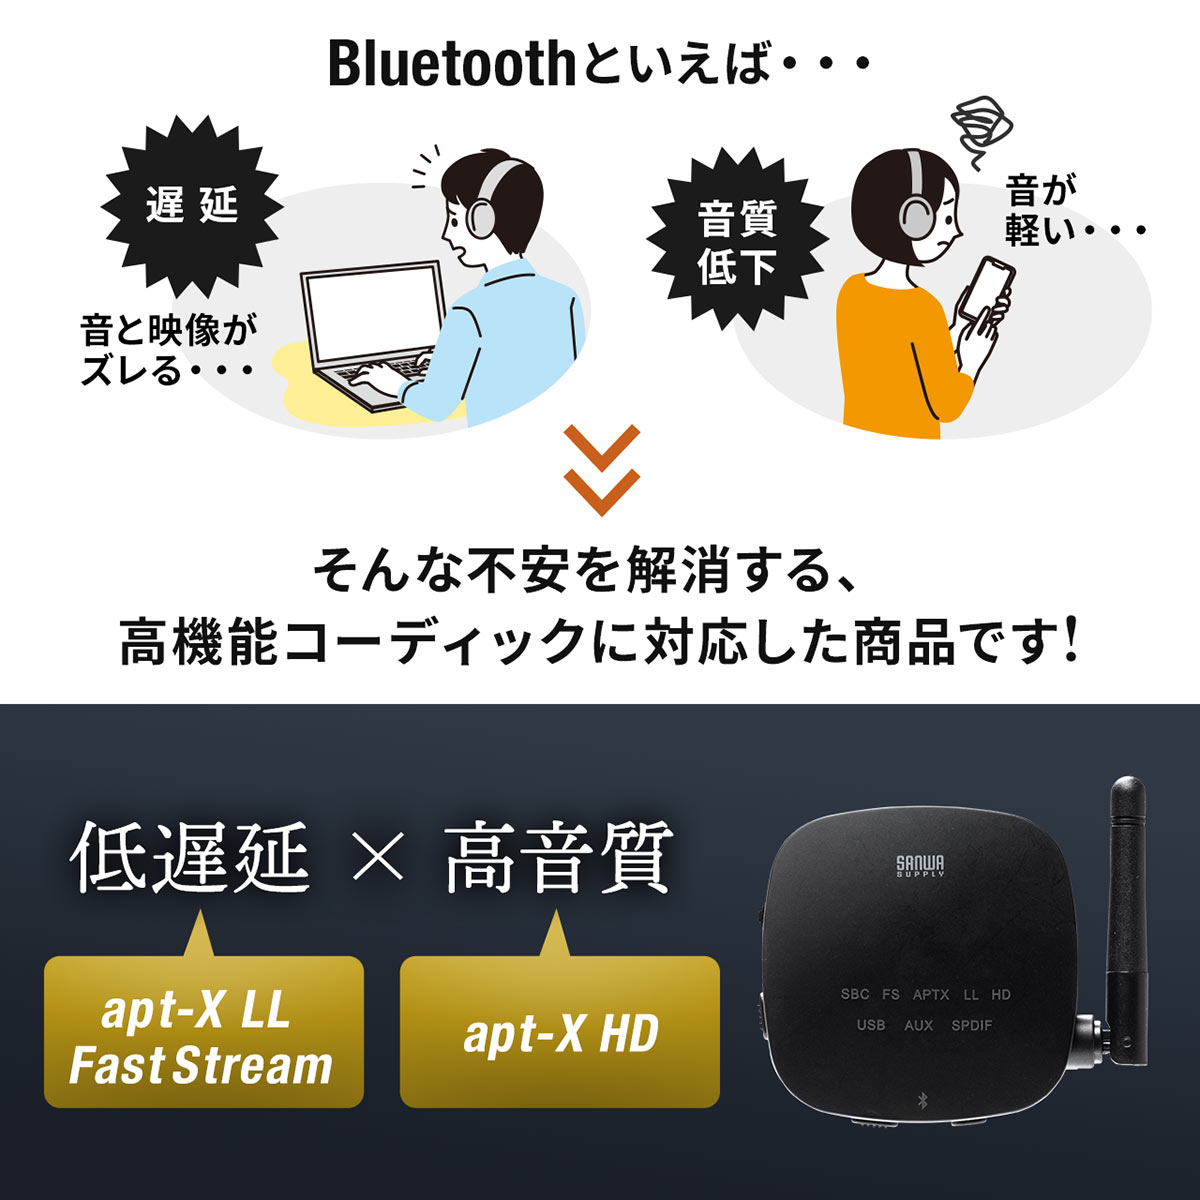 Bluetooth トランスミッター 送信機 受信機 レシーバー テレビ ブルートゥース 低遅延 高音質 ハイレゾ相当 オーディオトランスミッター 400-BTAD008